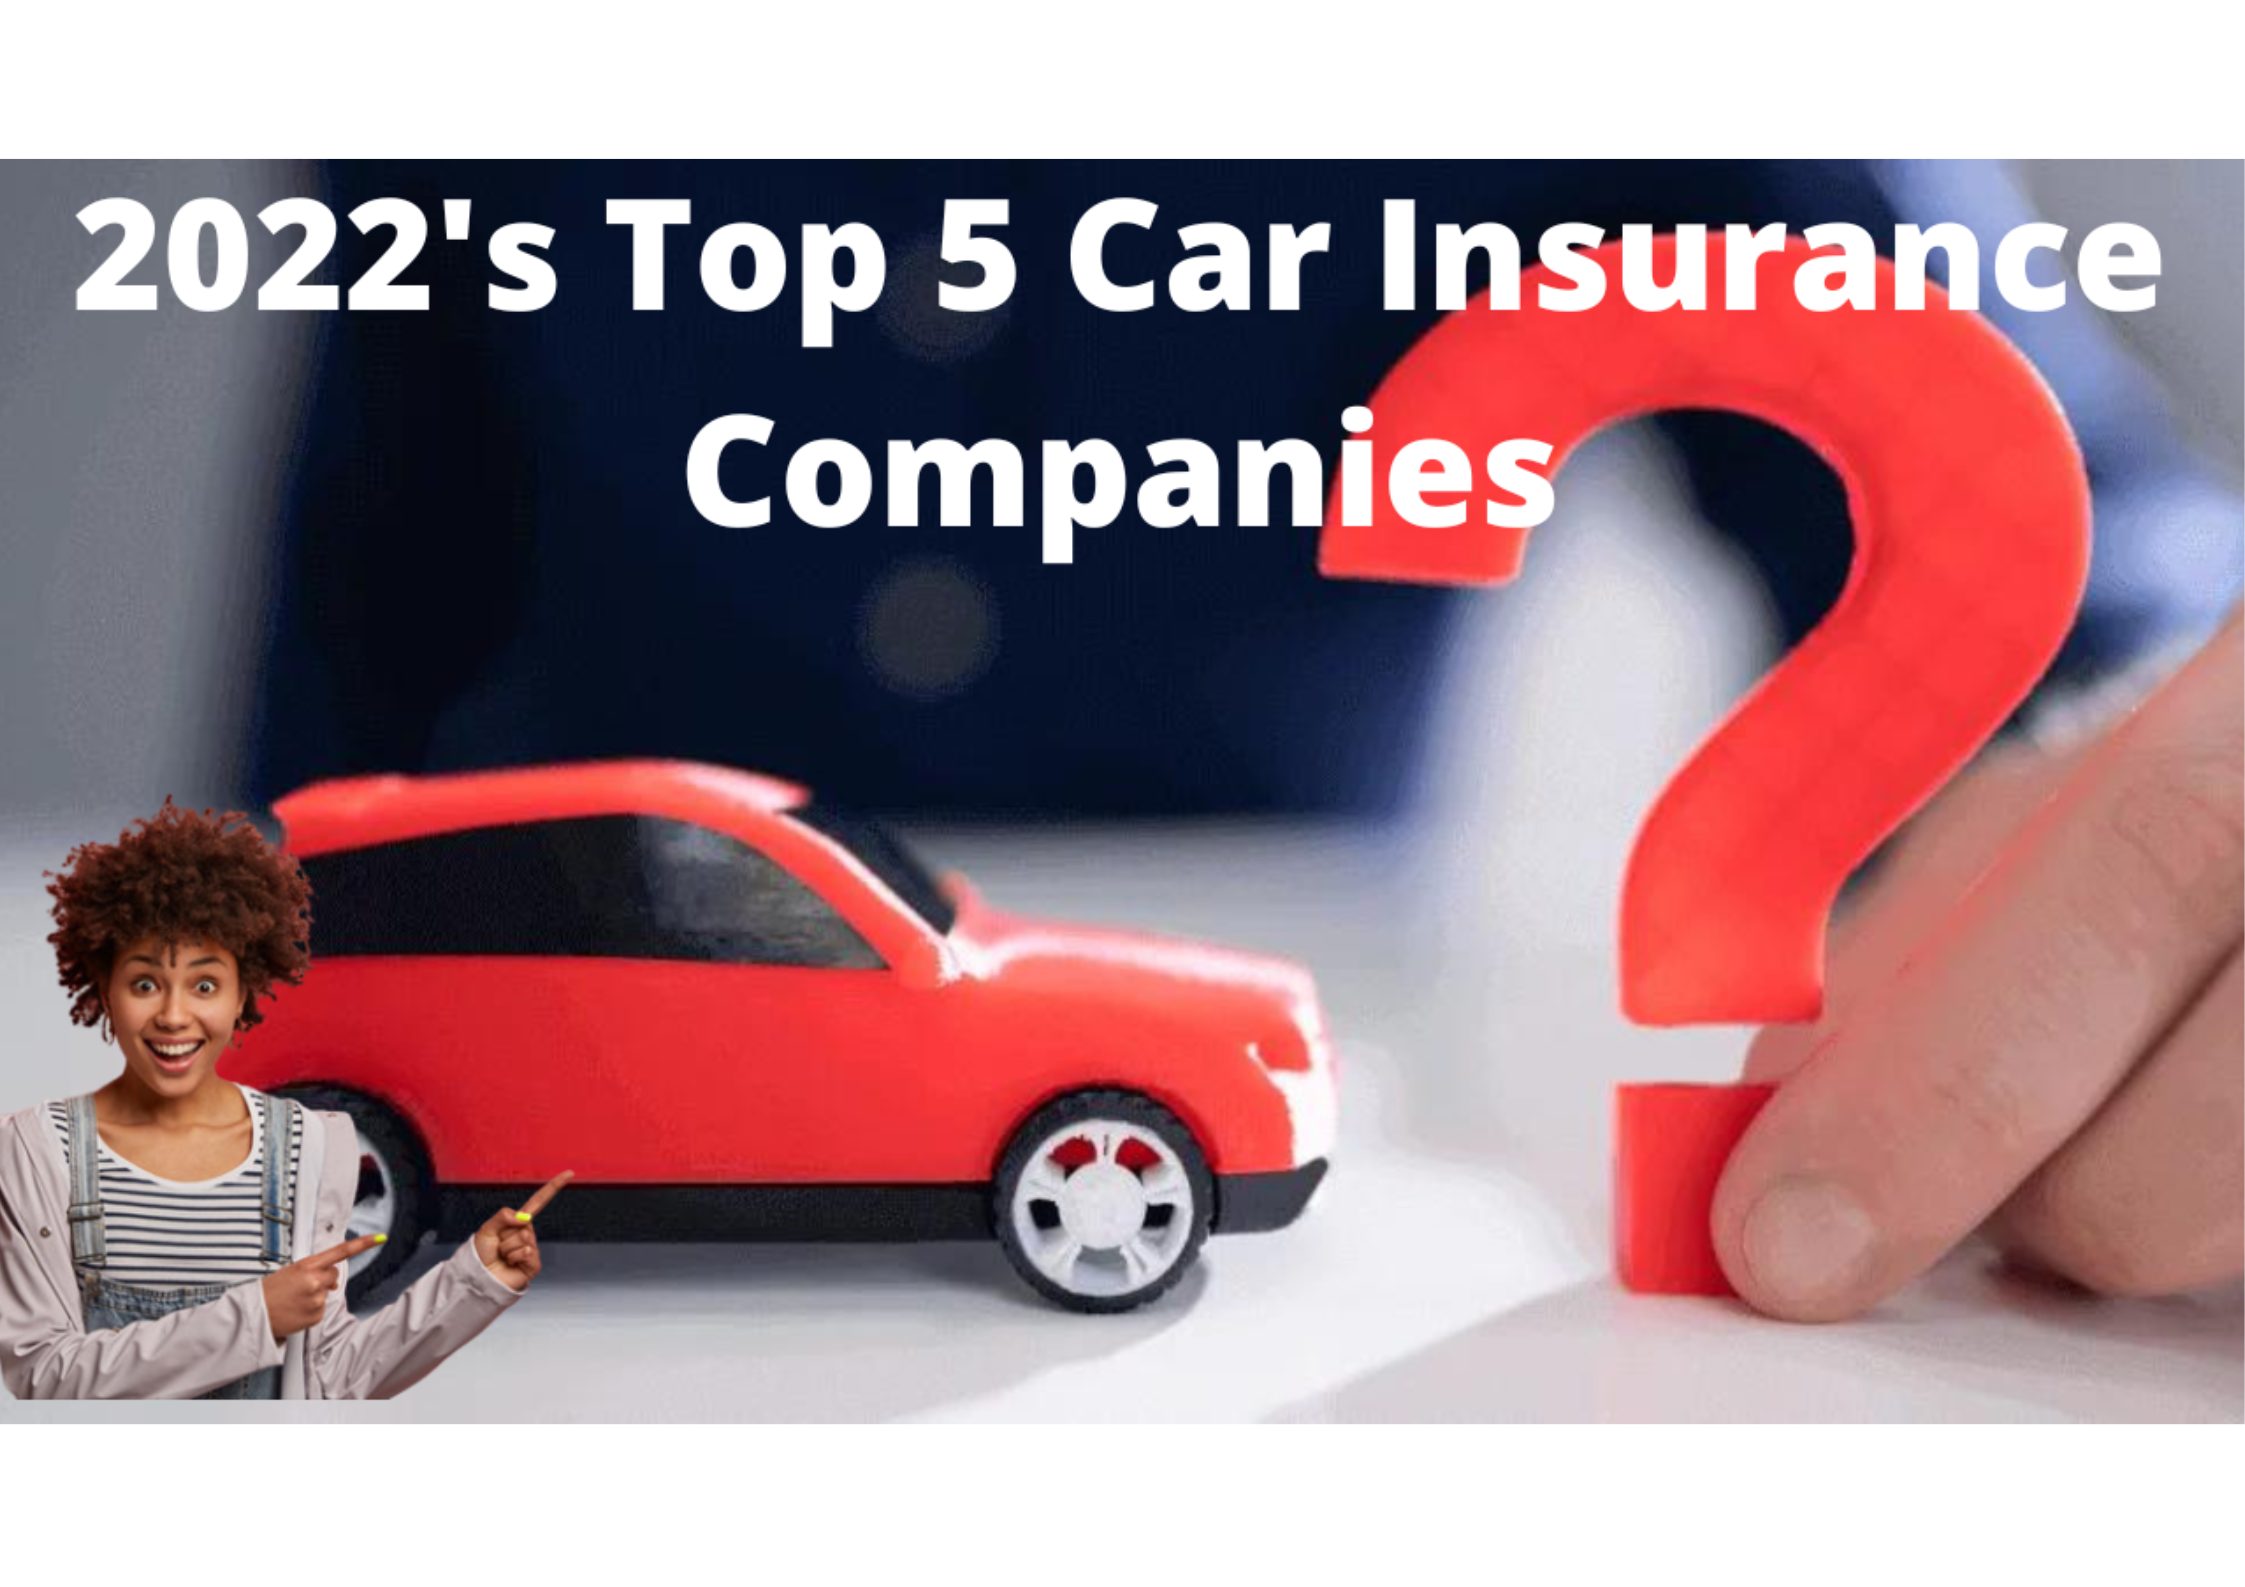 2022’s Top 5 Car Insurance Companies